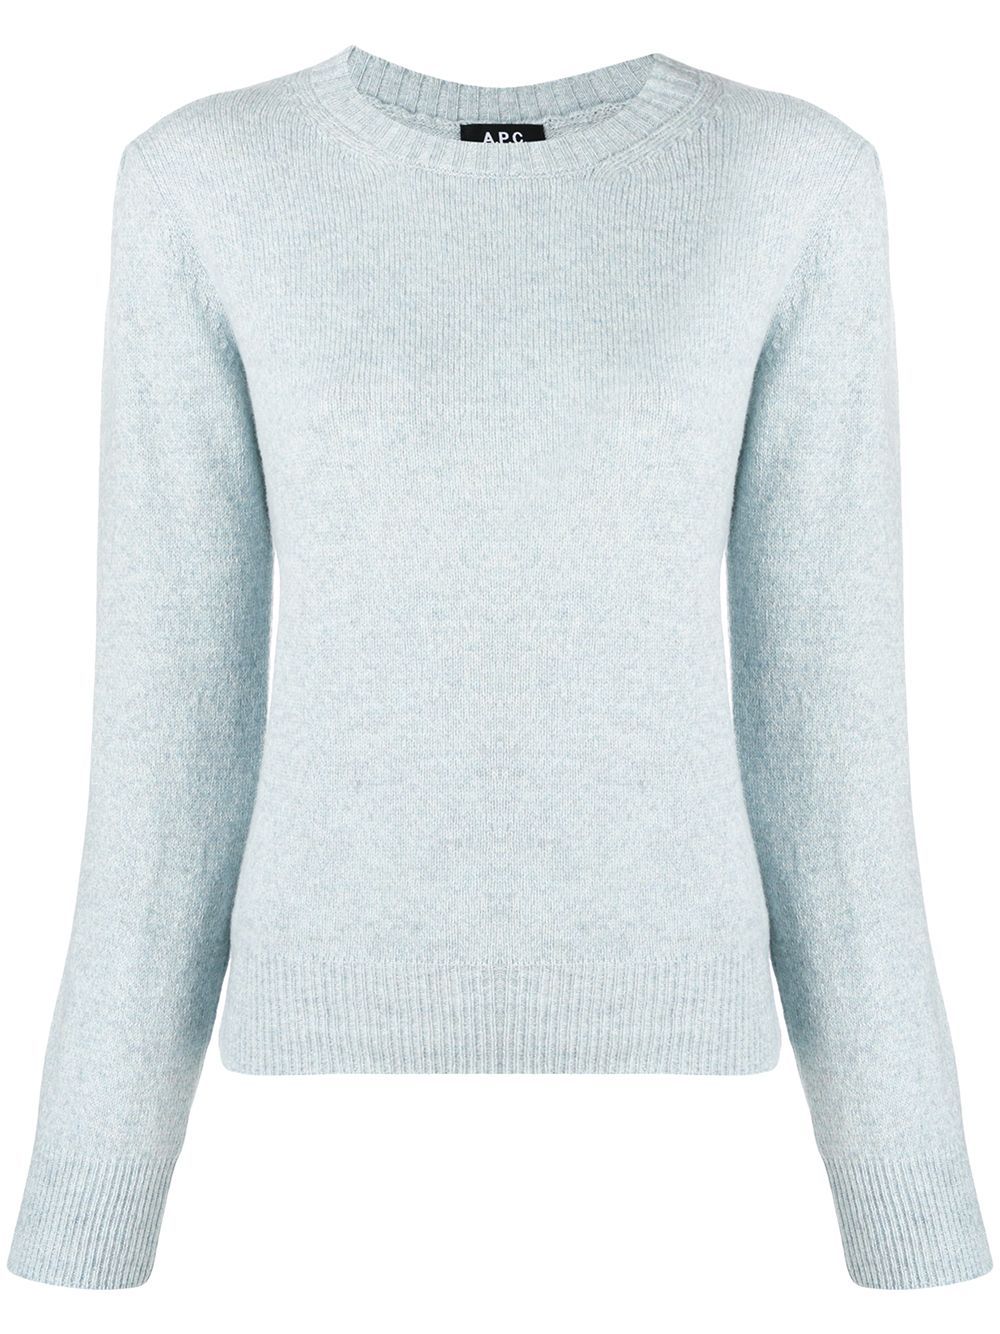 A.P.C. round neck sweater - Blue | FarFetch US